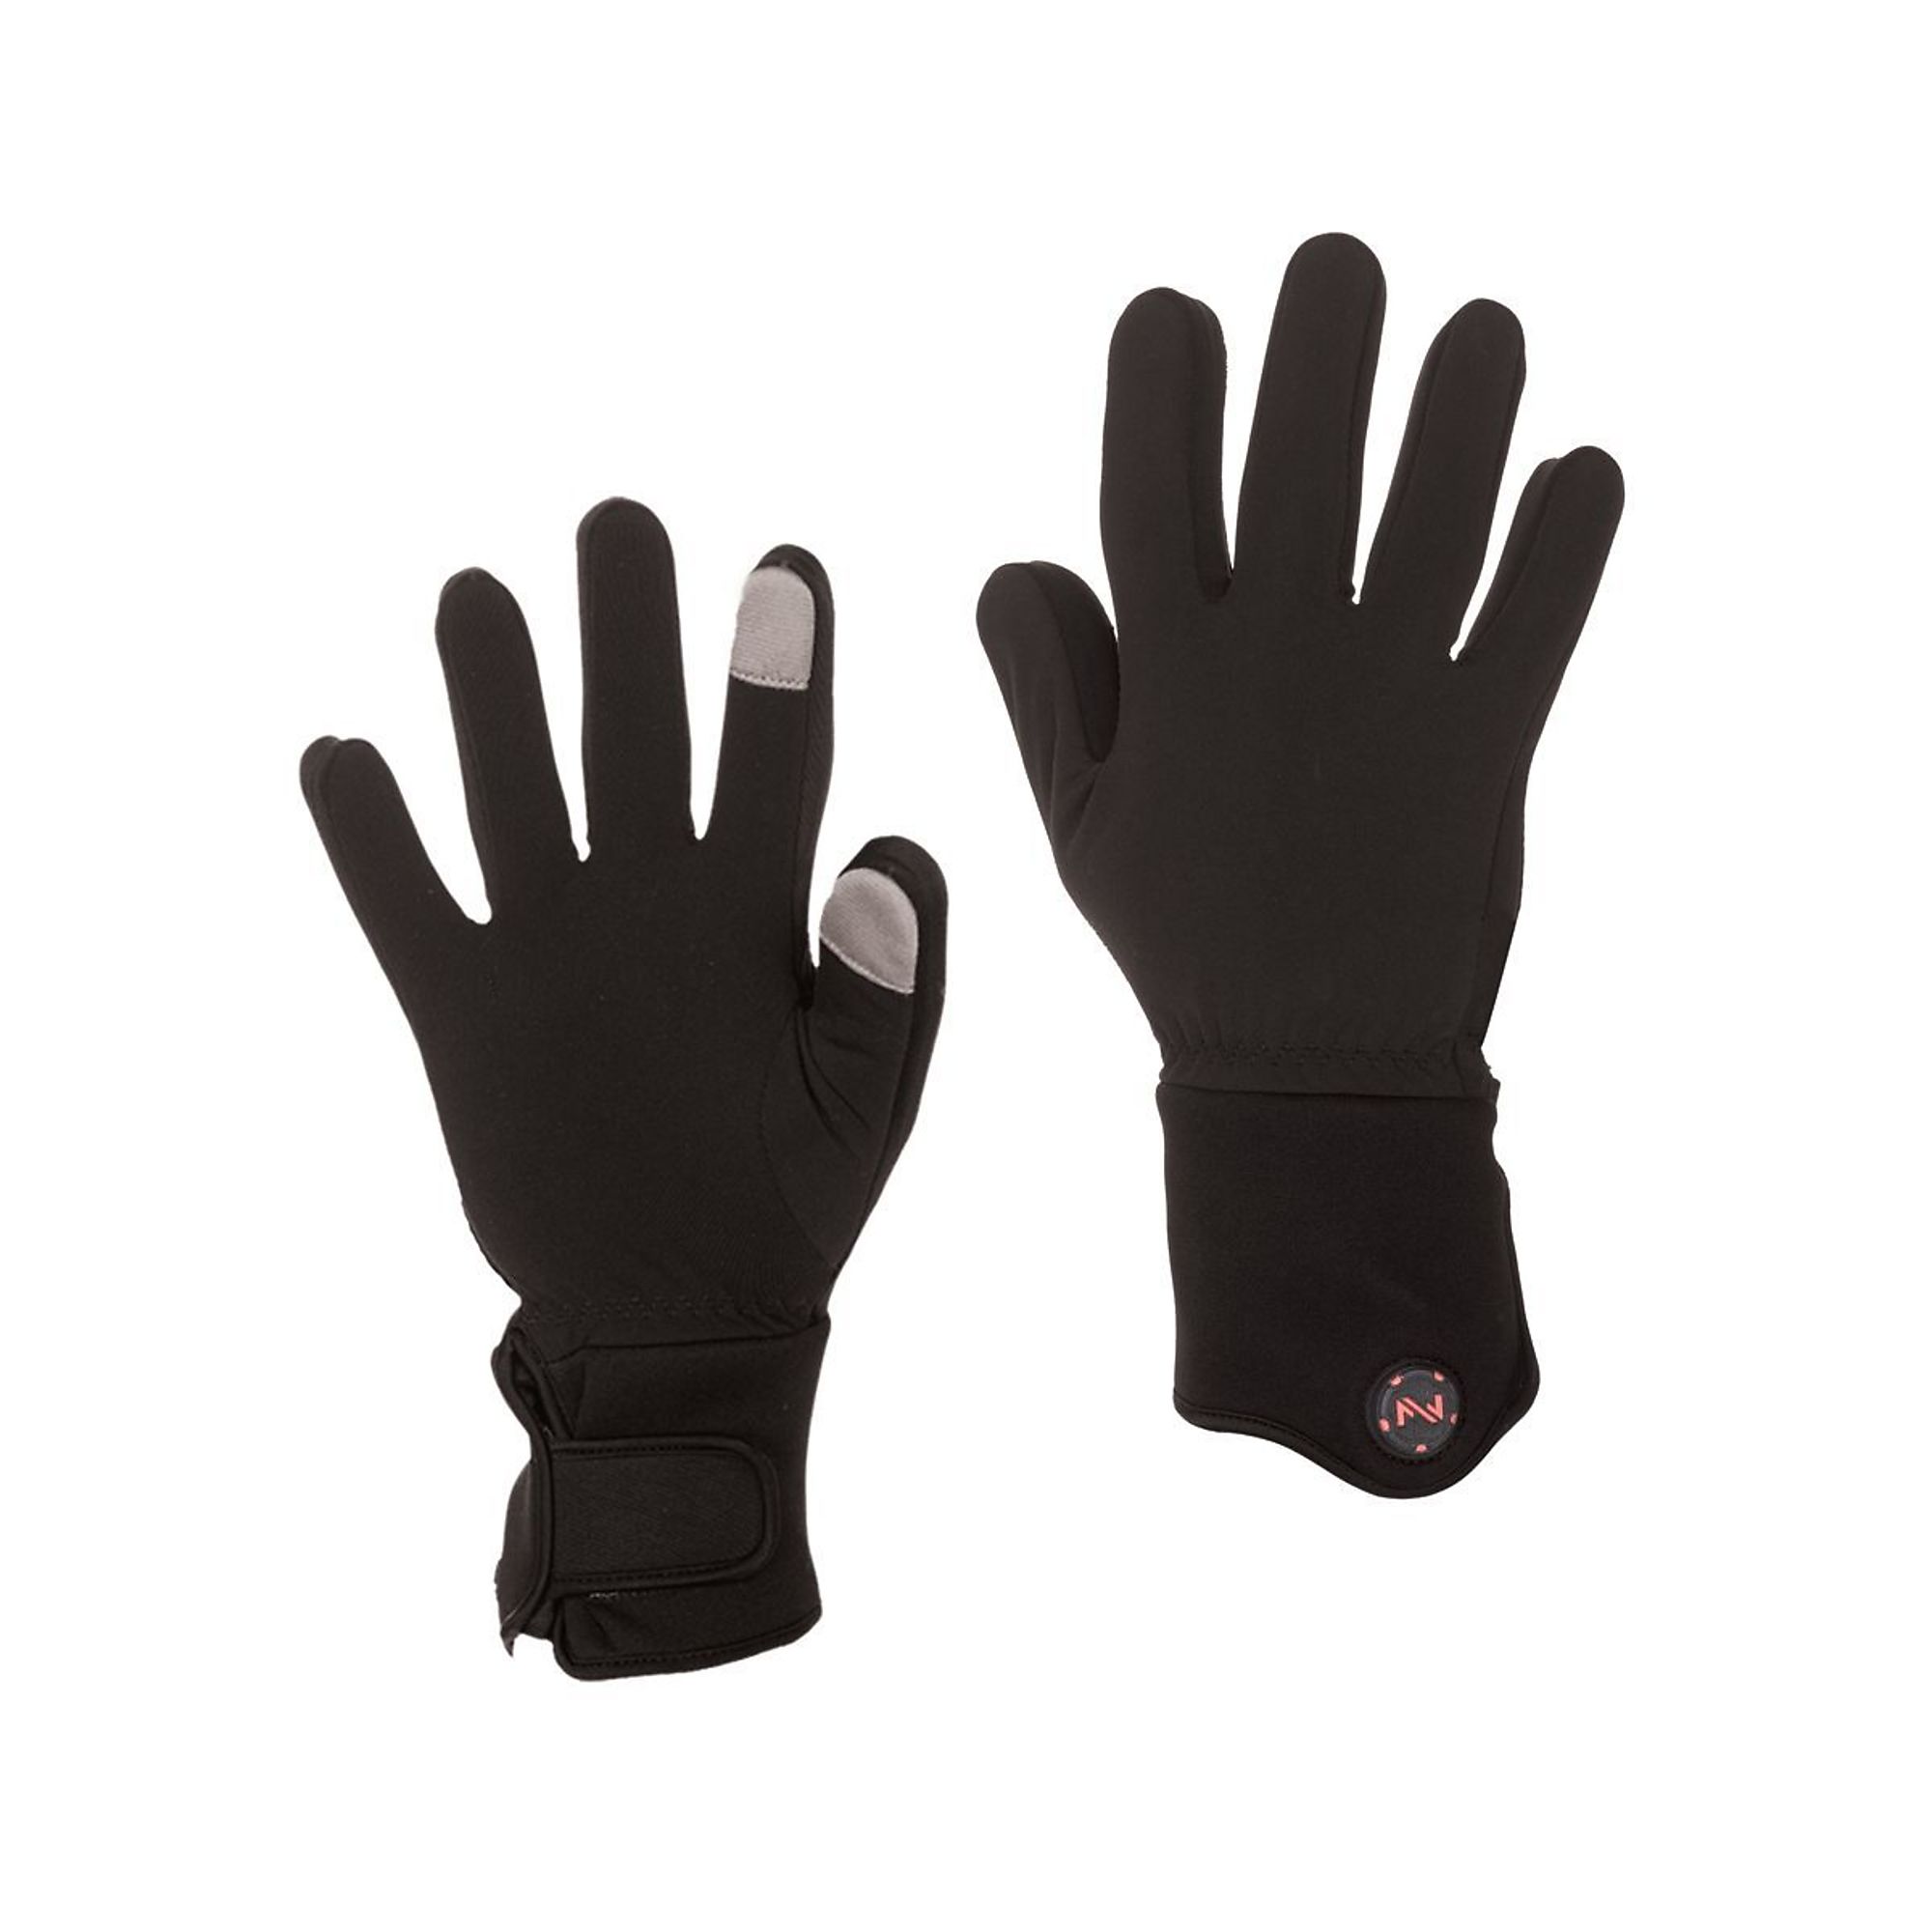 Fieldsheer, Glove Liner | Unisex | 7.4V | BLK | XS, Size XS, Color Black, Included (qty.) 2 Model MWUG06010120 -  MOBILE WARMING